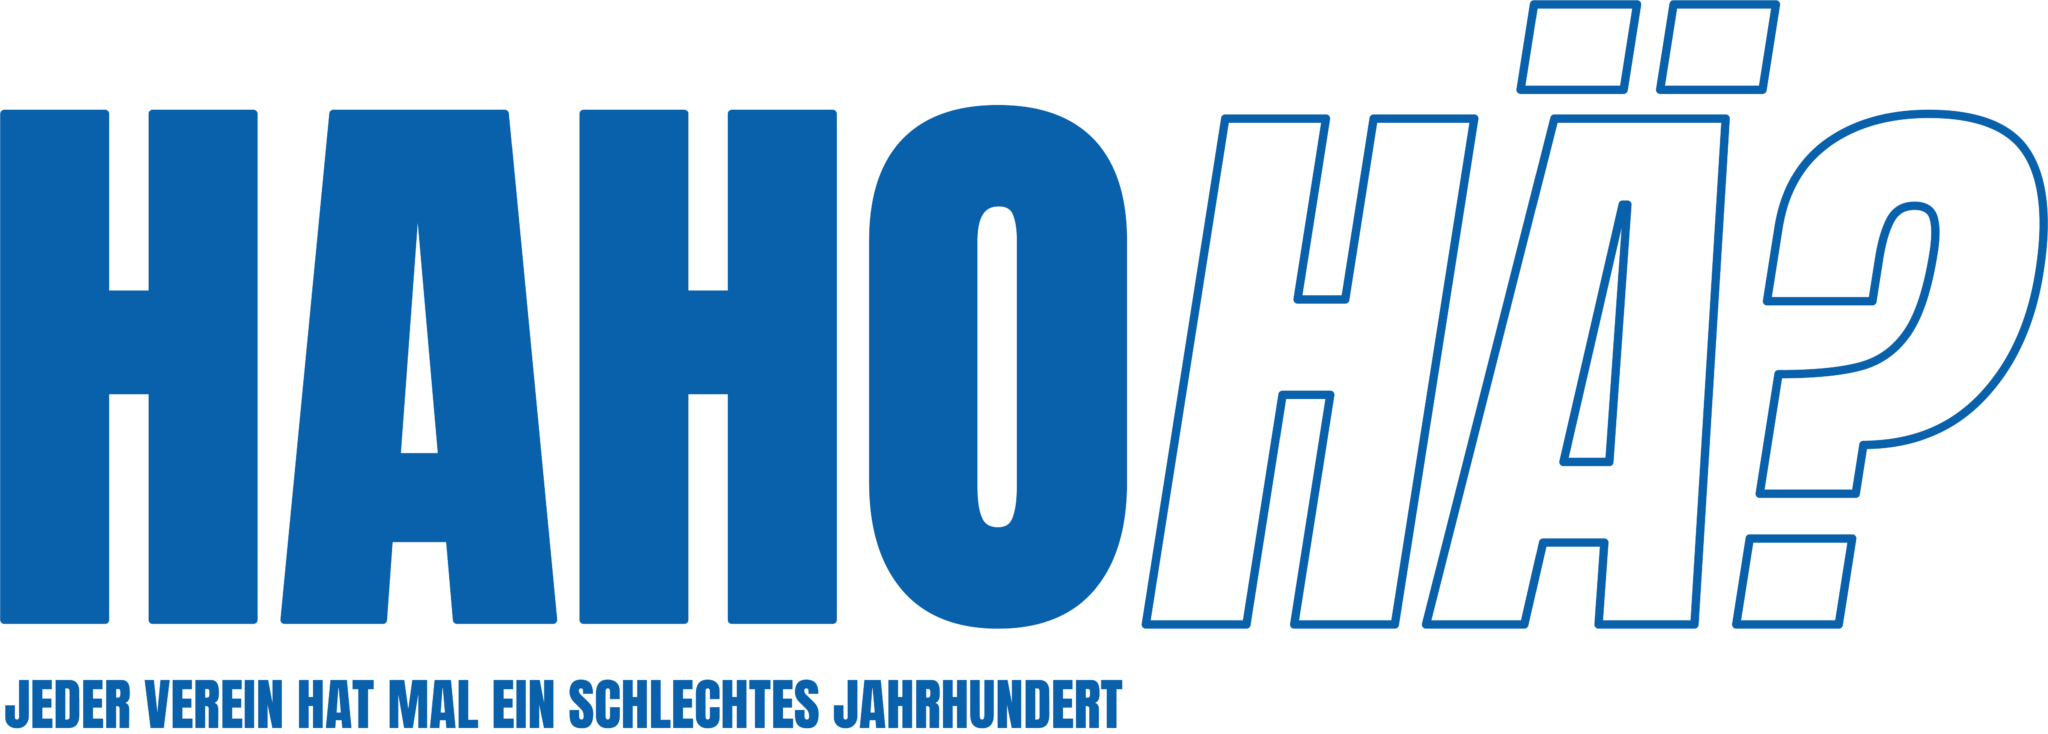 HaHoHae_Logo